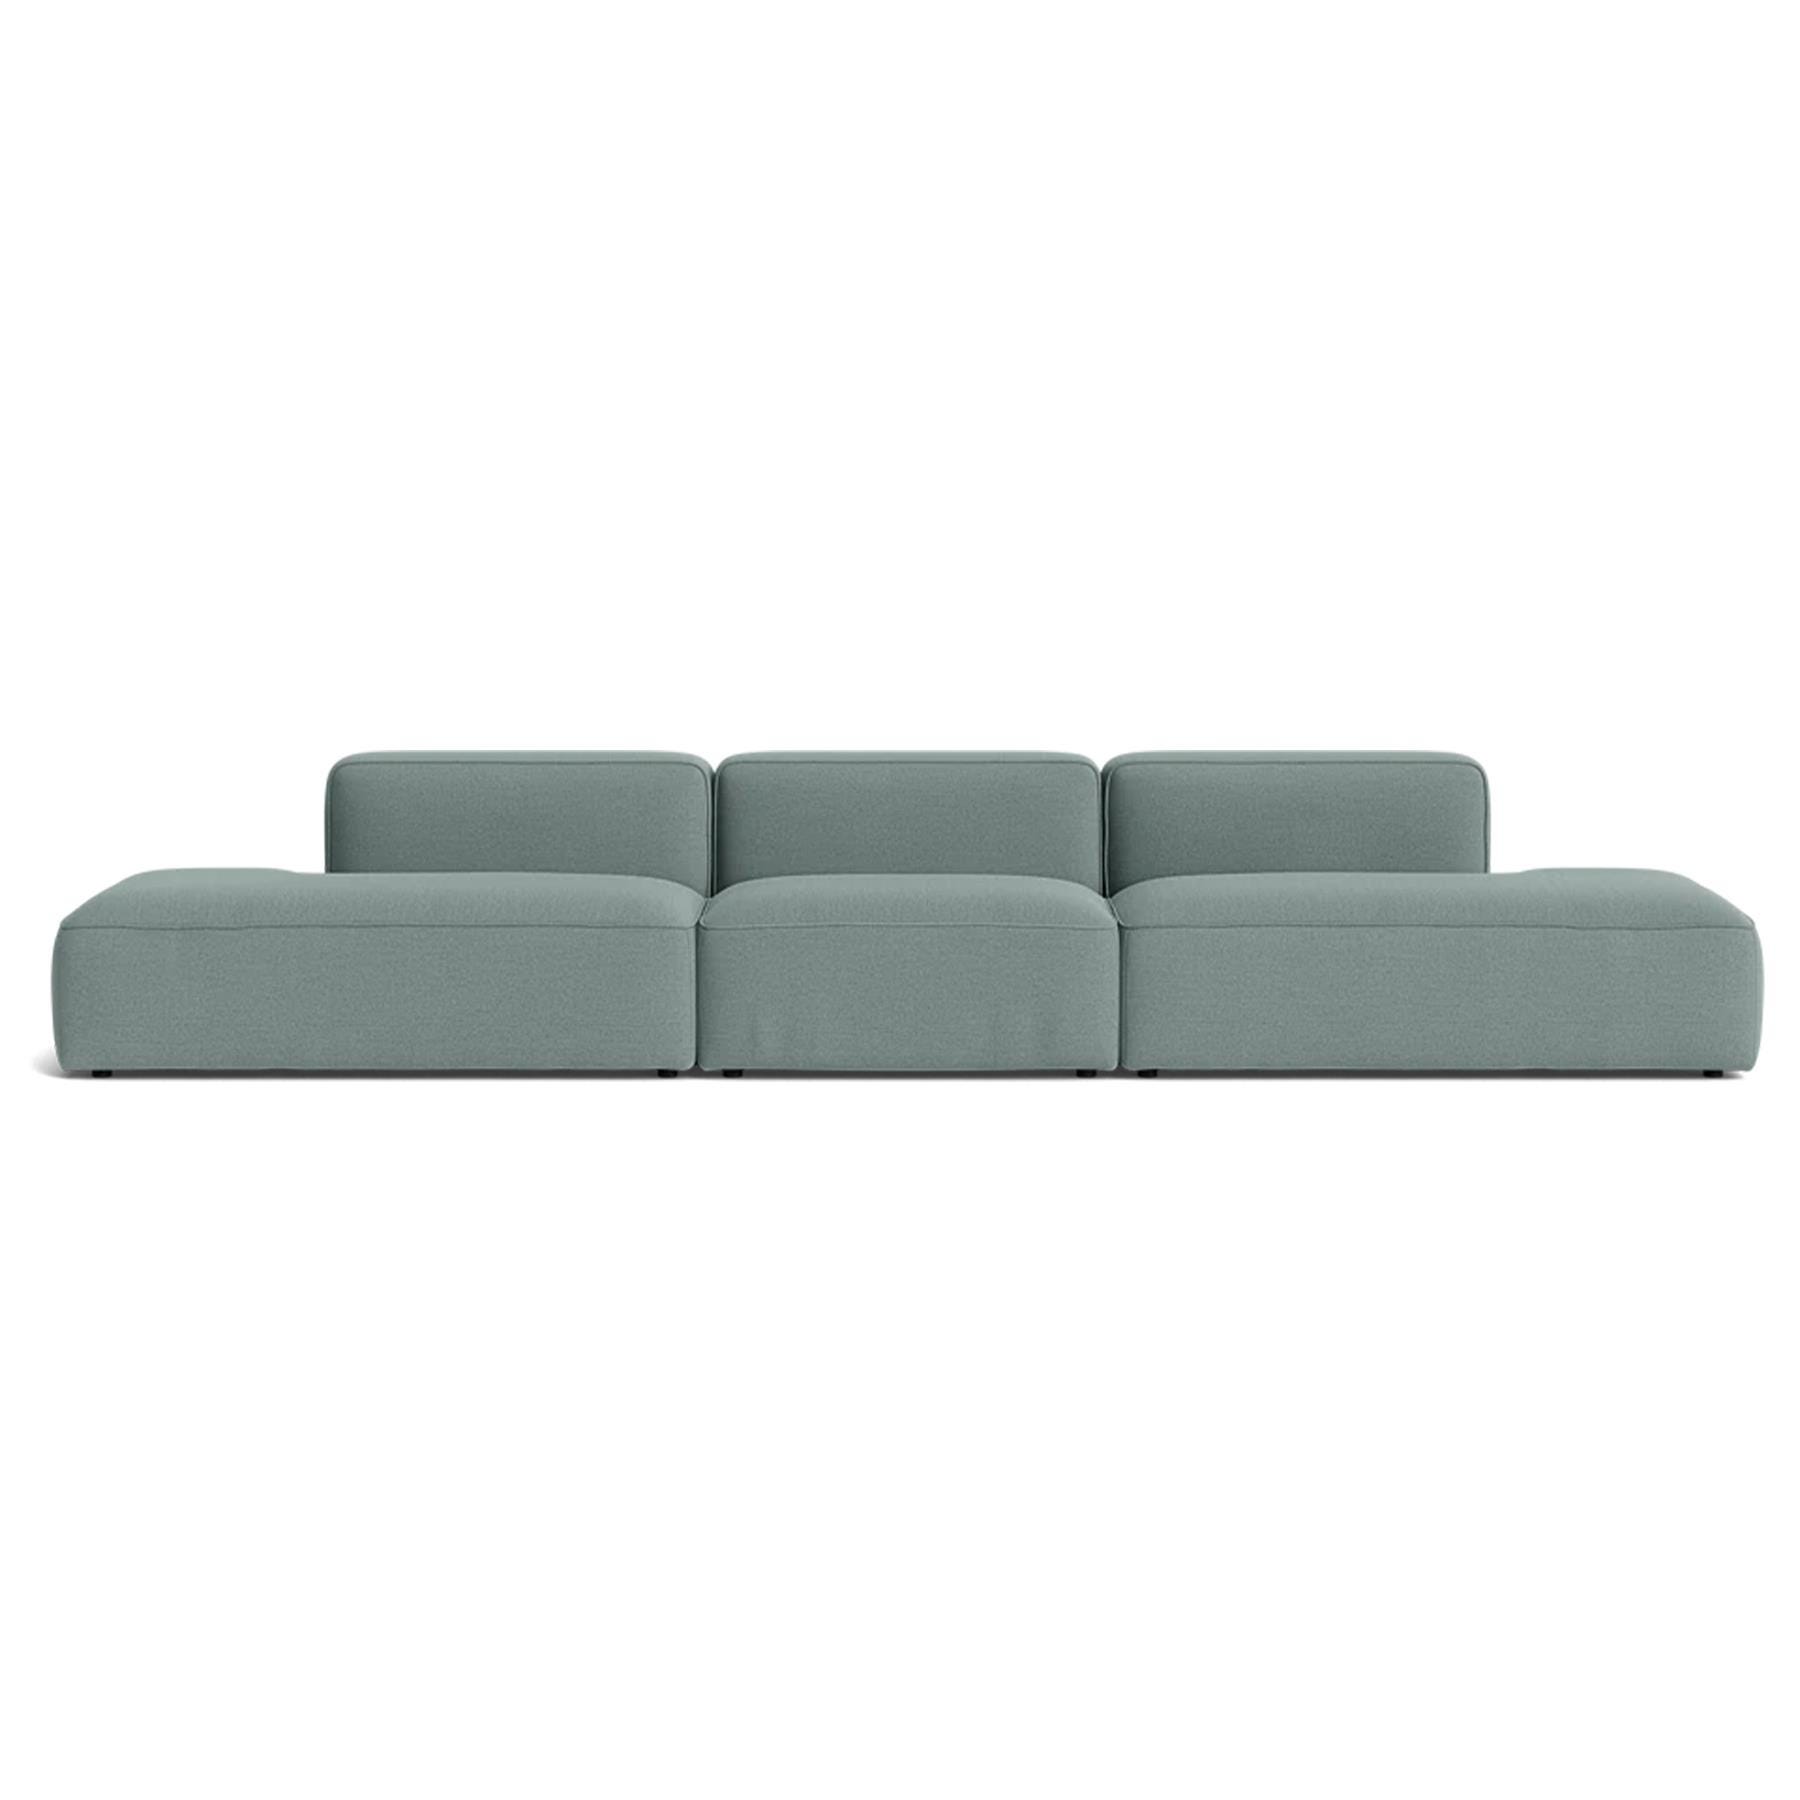 Make Nordic Basecamp Xl Midt Open Sofa Rewool 868 Green Designer Furniture From Holloways Of Ludlow